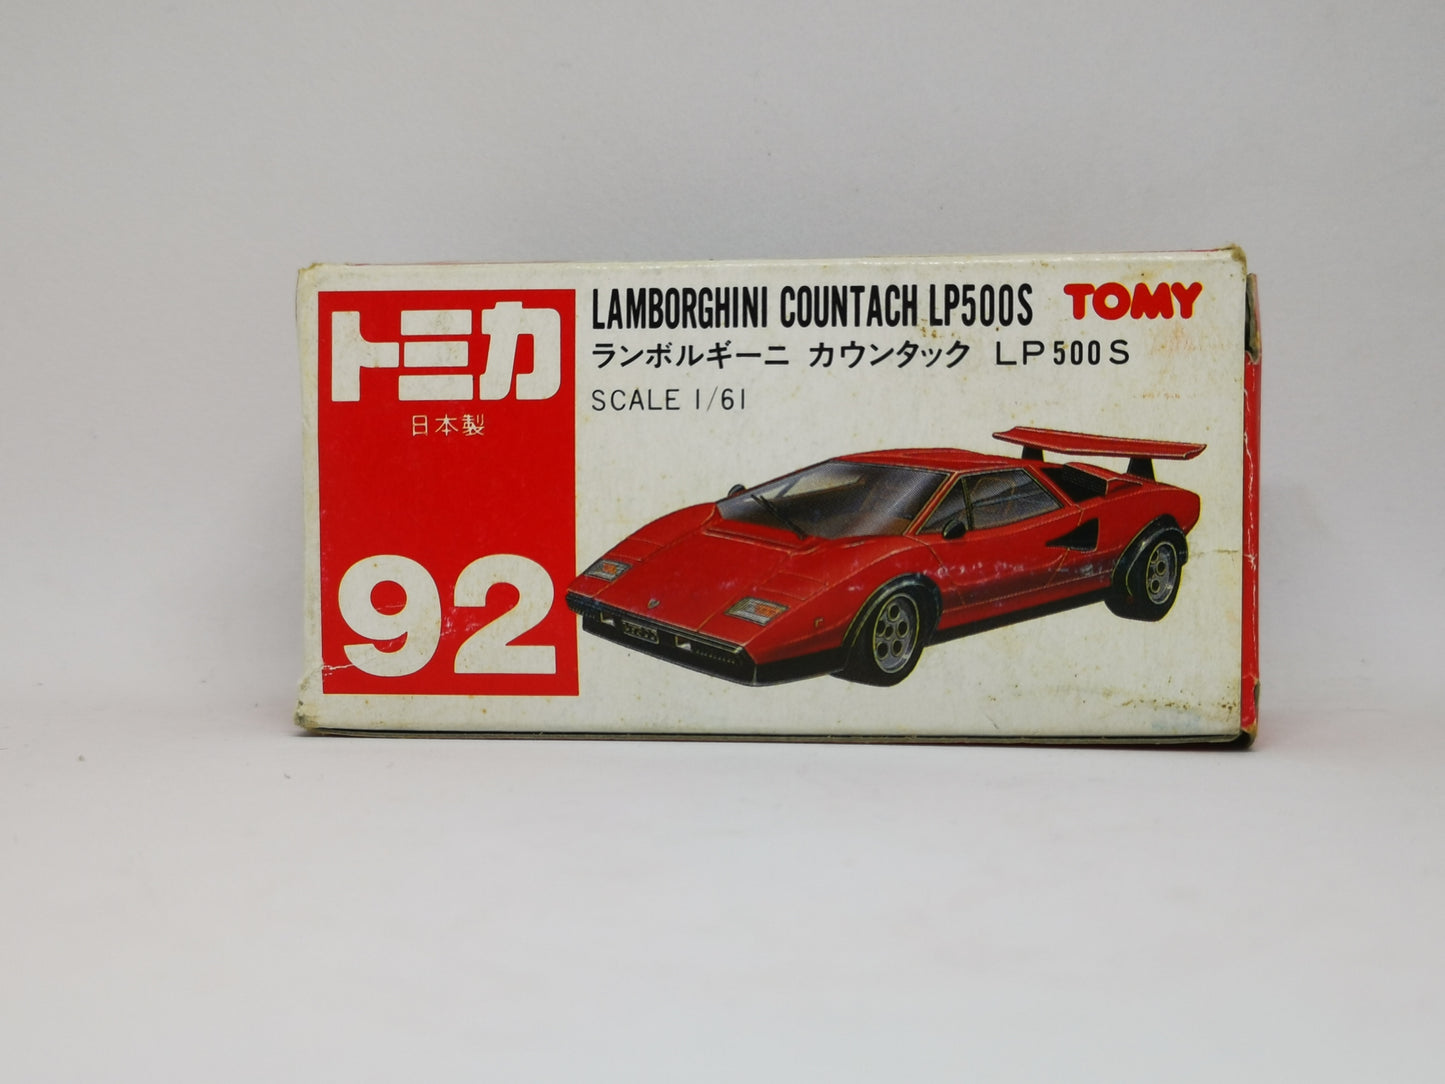 Tomica #92 Lamborghini Countach LP500s Made in Japan